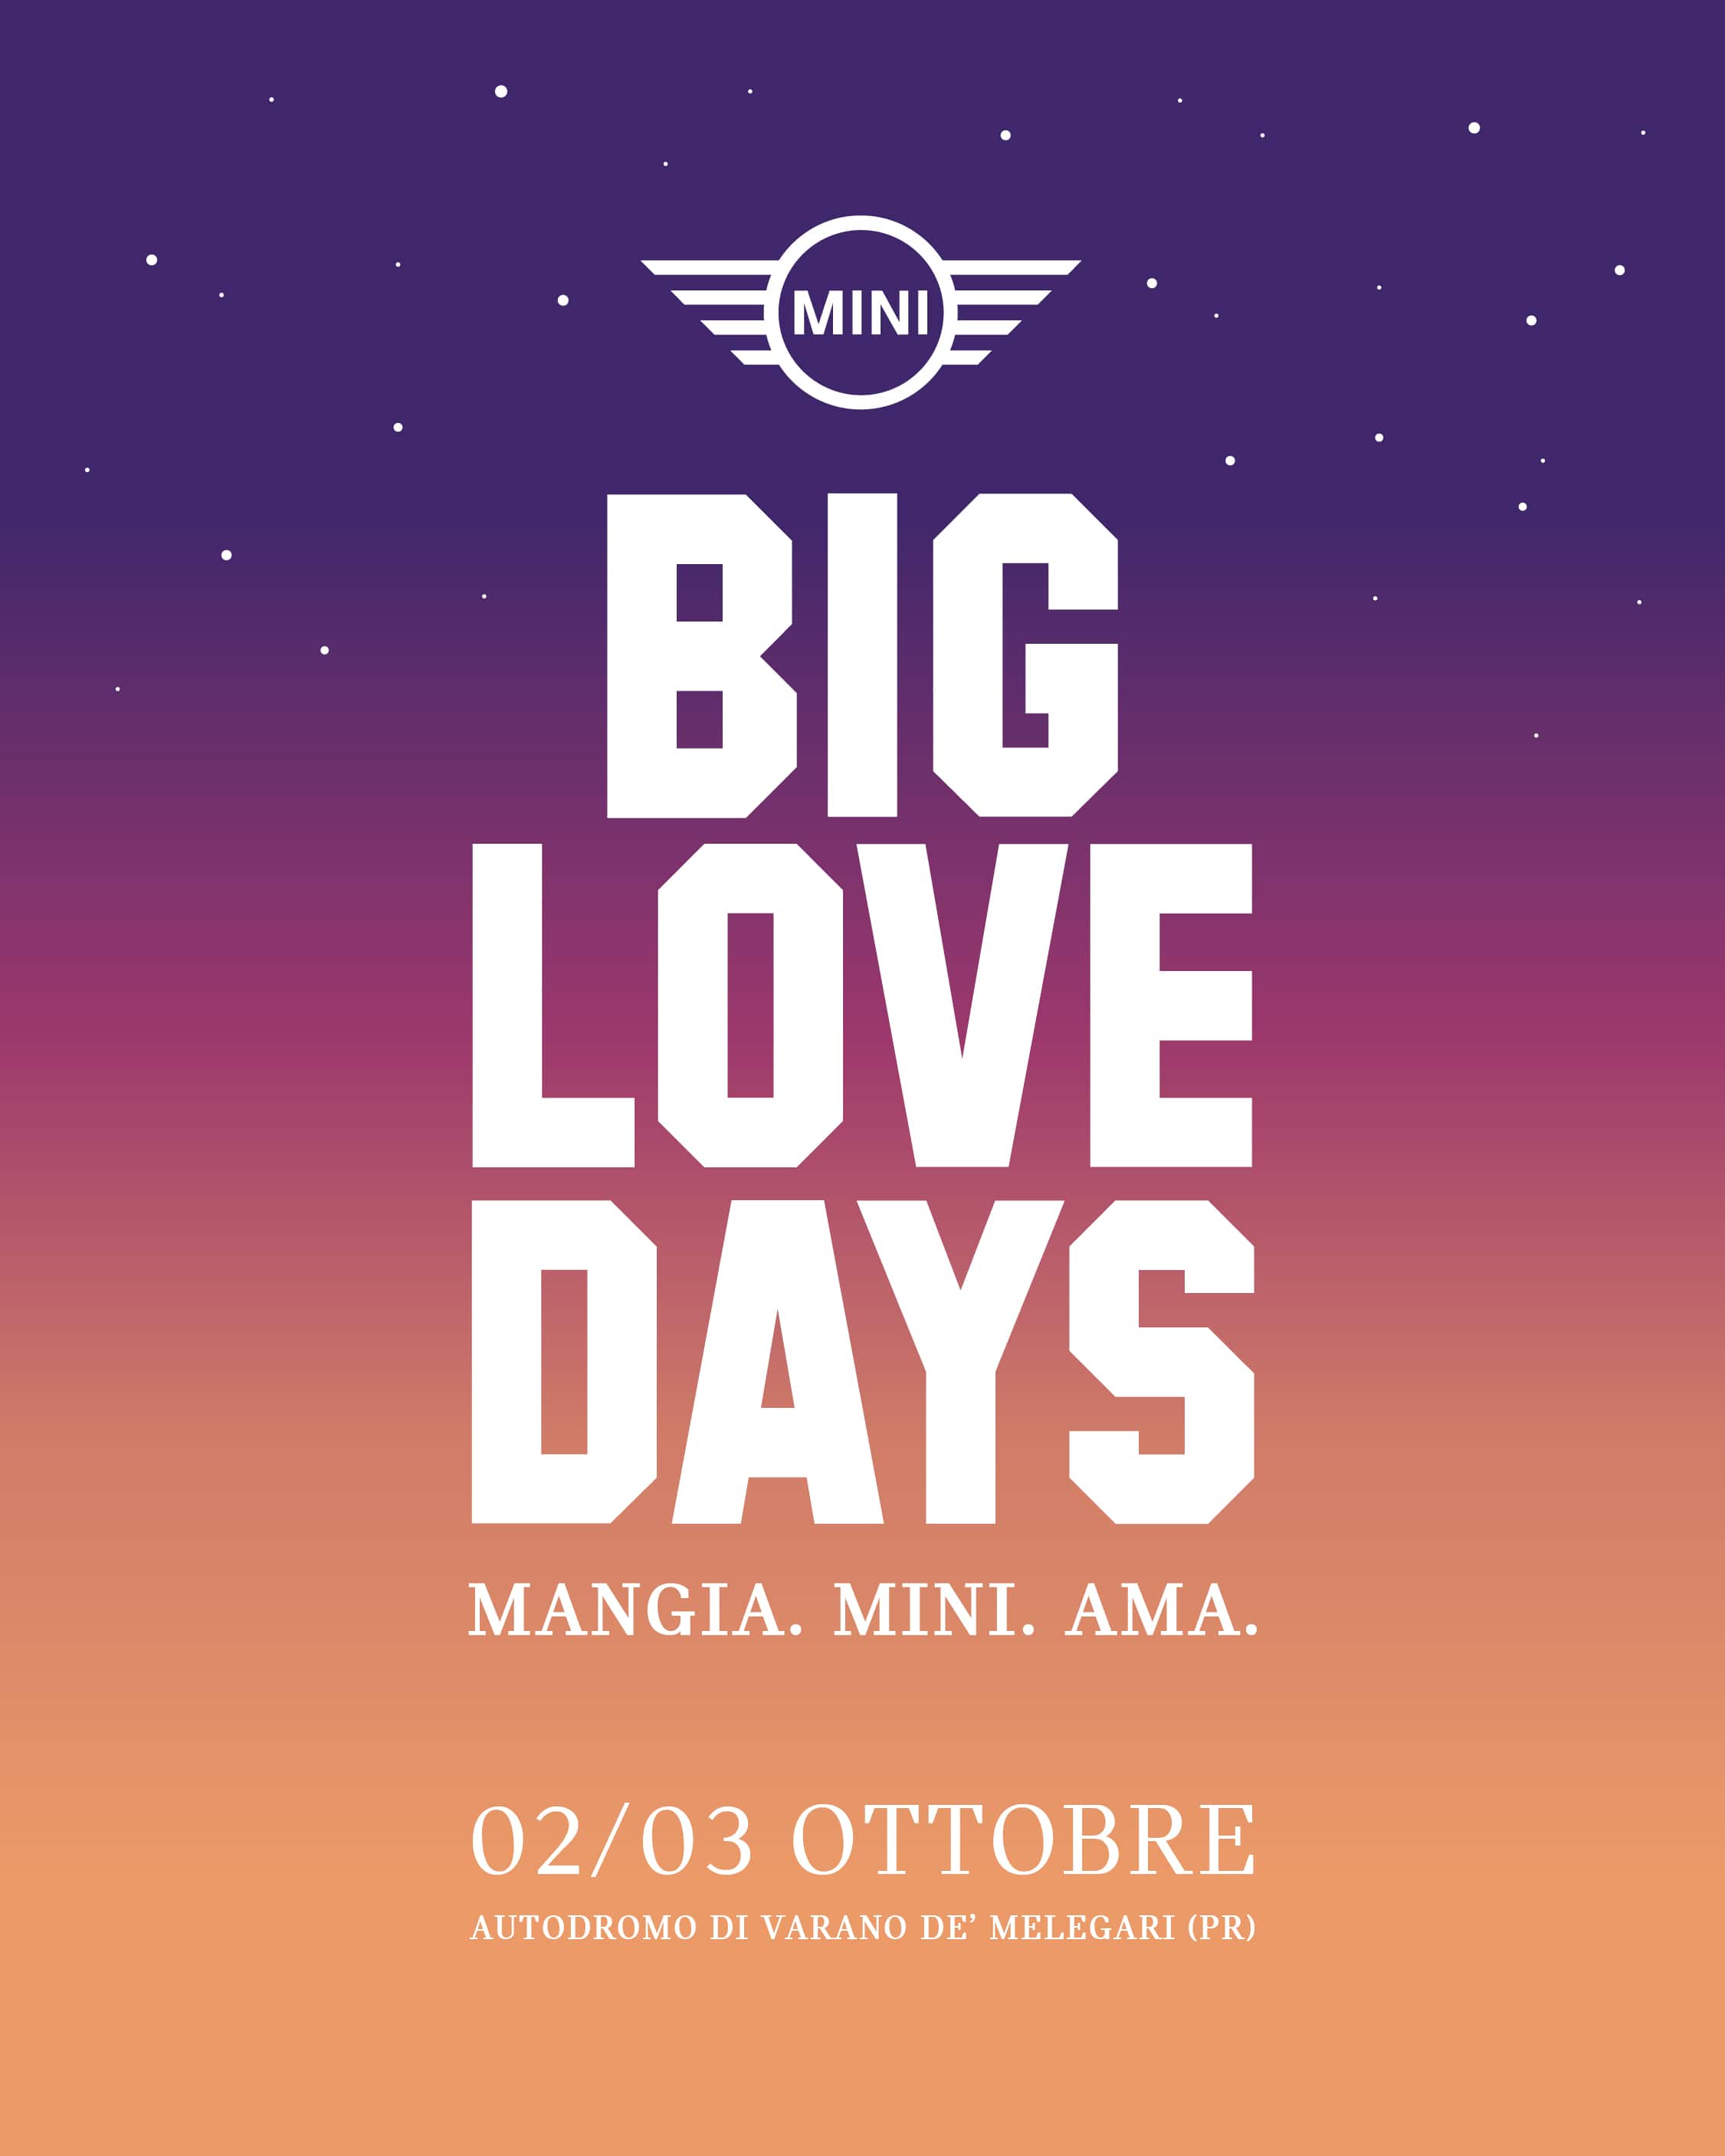 MINI Big Love Days Mangia. MINI. Ama. 